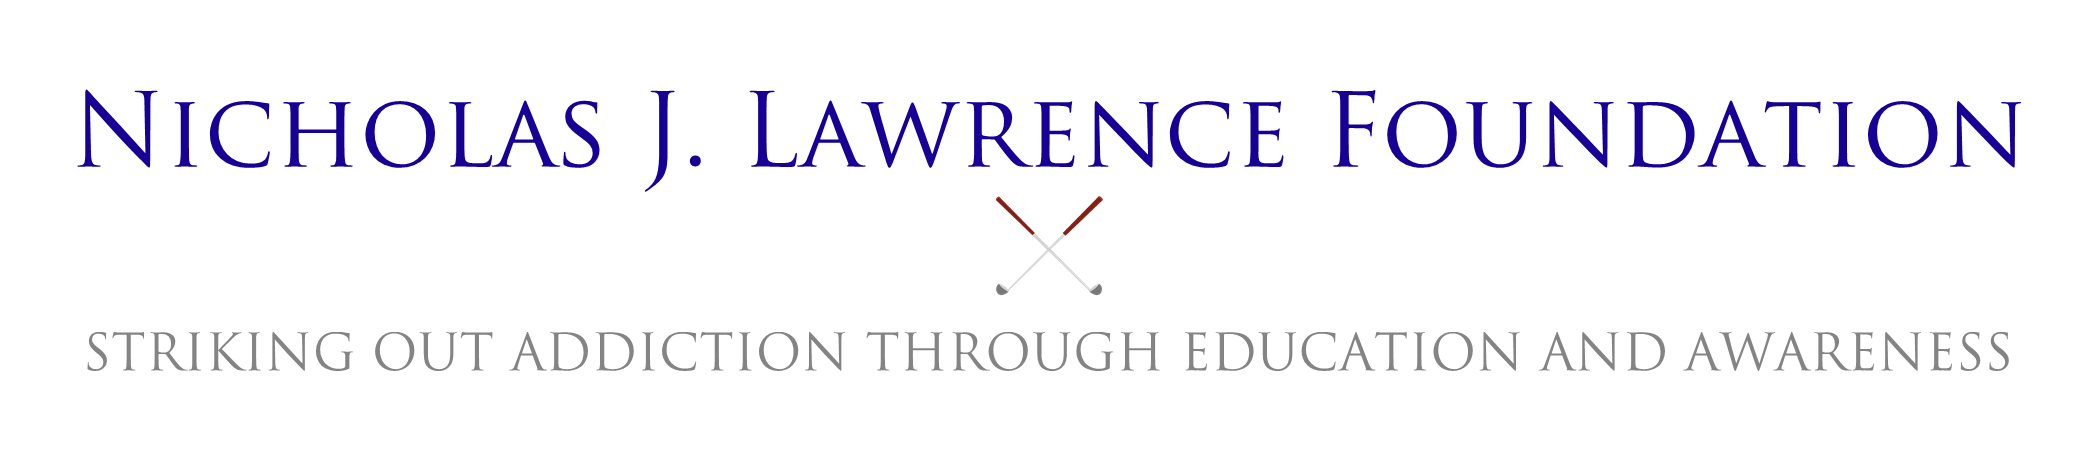 The Nicholas J. Lawrence Foundation